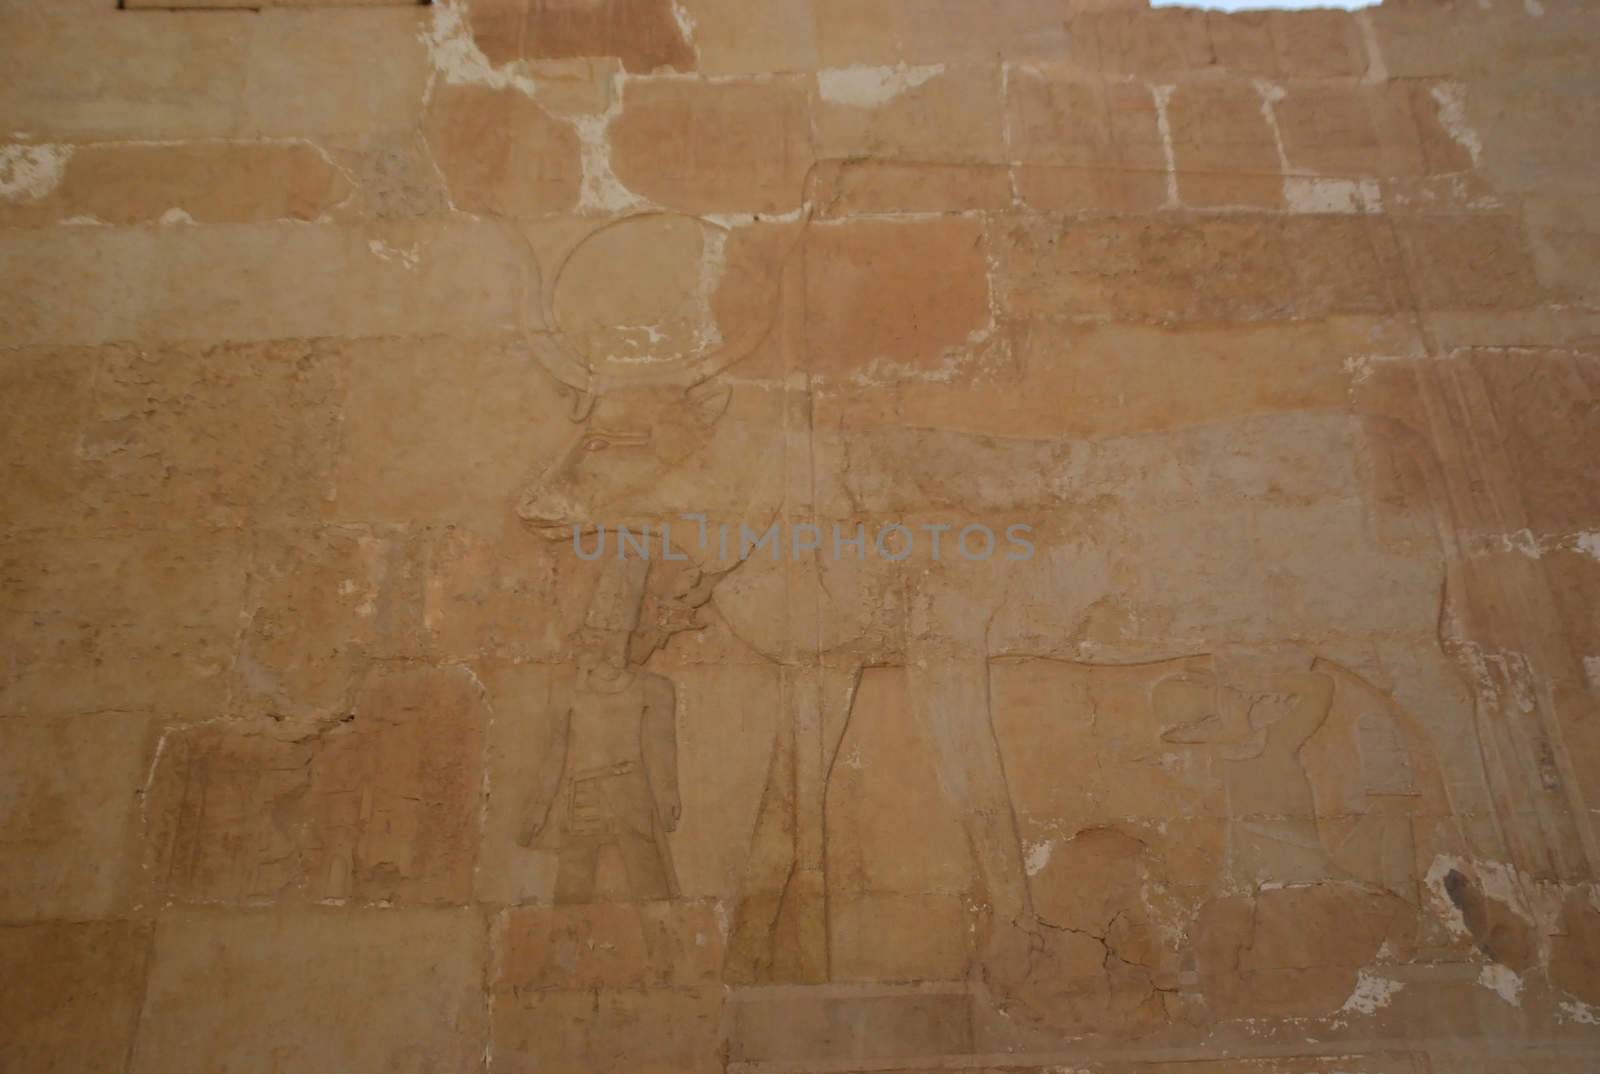 Relief depicting the Goddess Hatshepsut Temple of Hatshepsut at Theban necropolis, Luxor neighborhood, Egypt. The images on the walls by olga_ovchinnikova